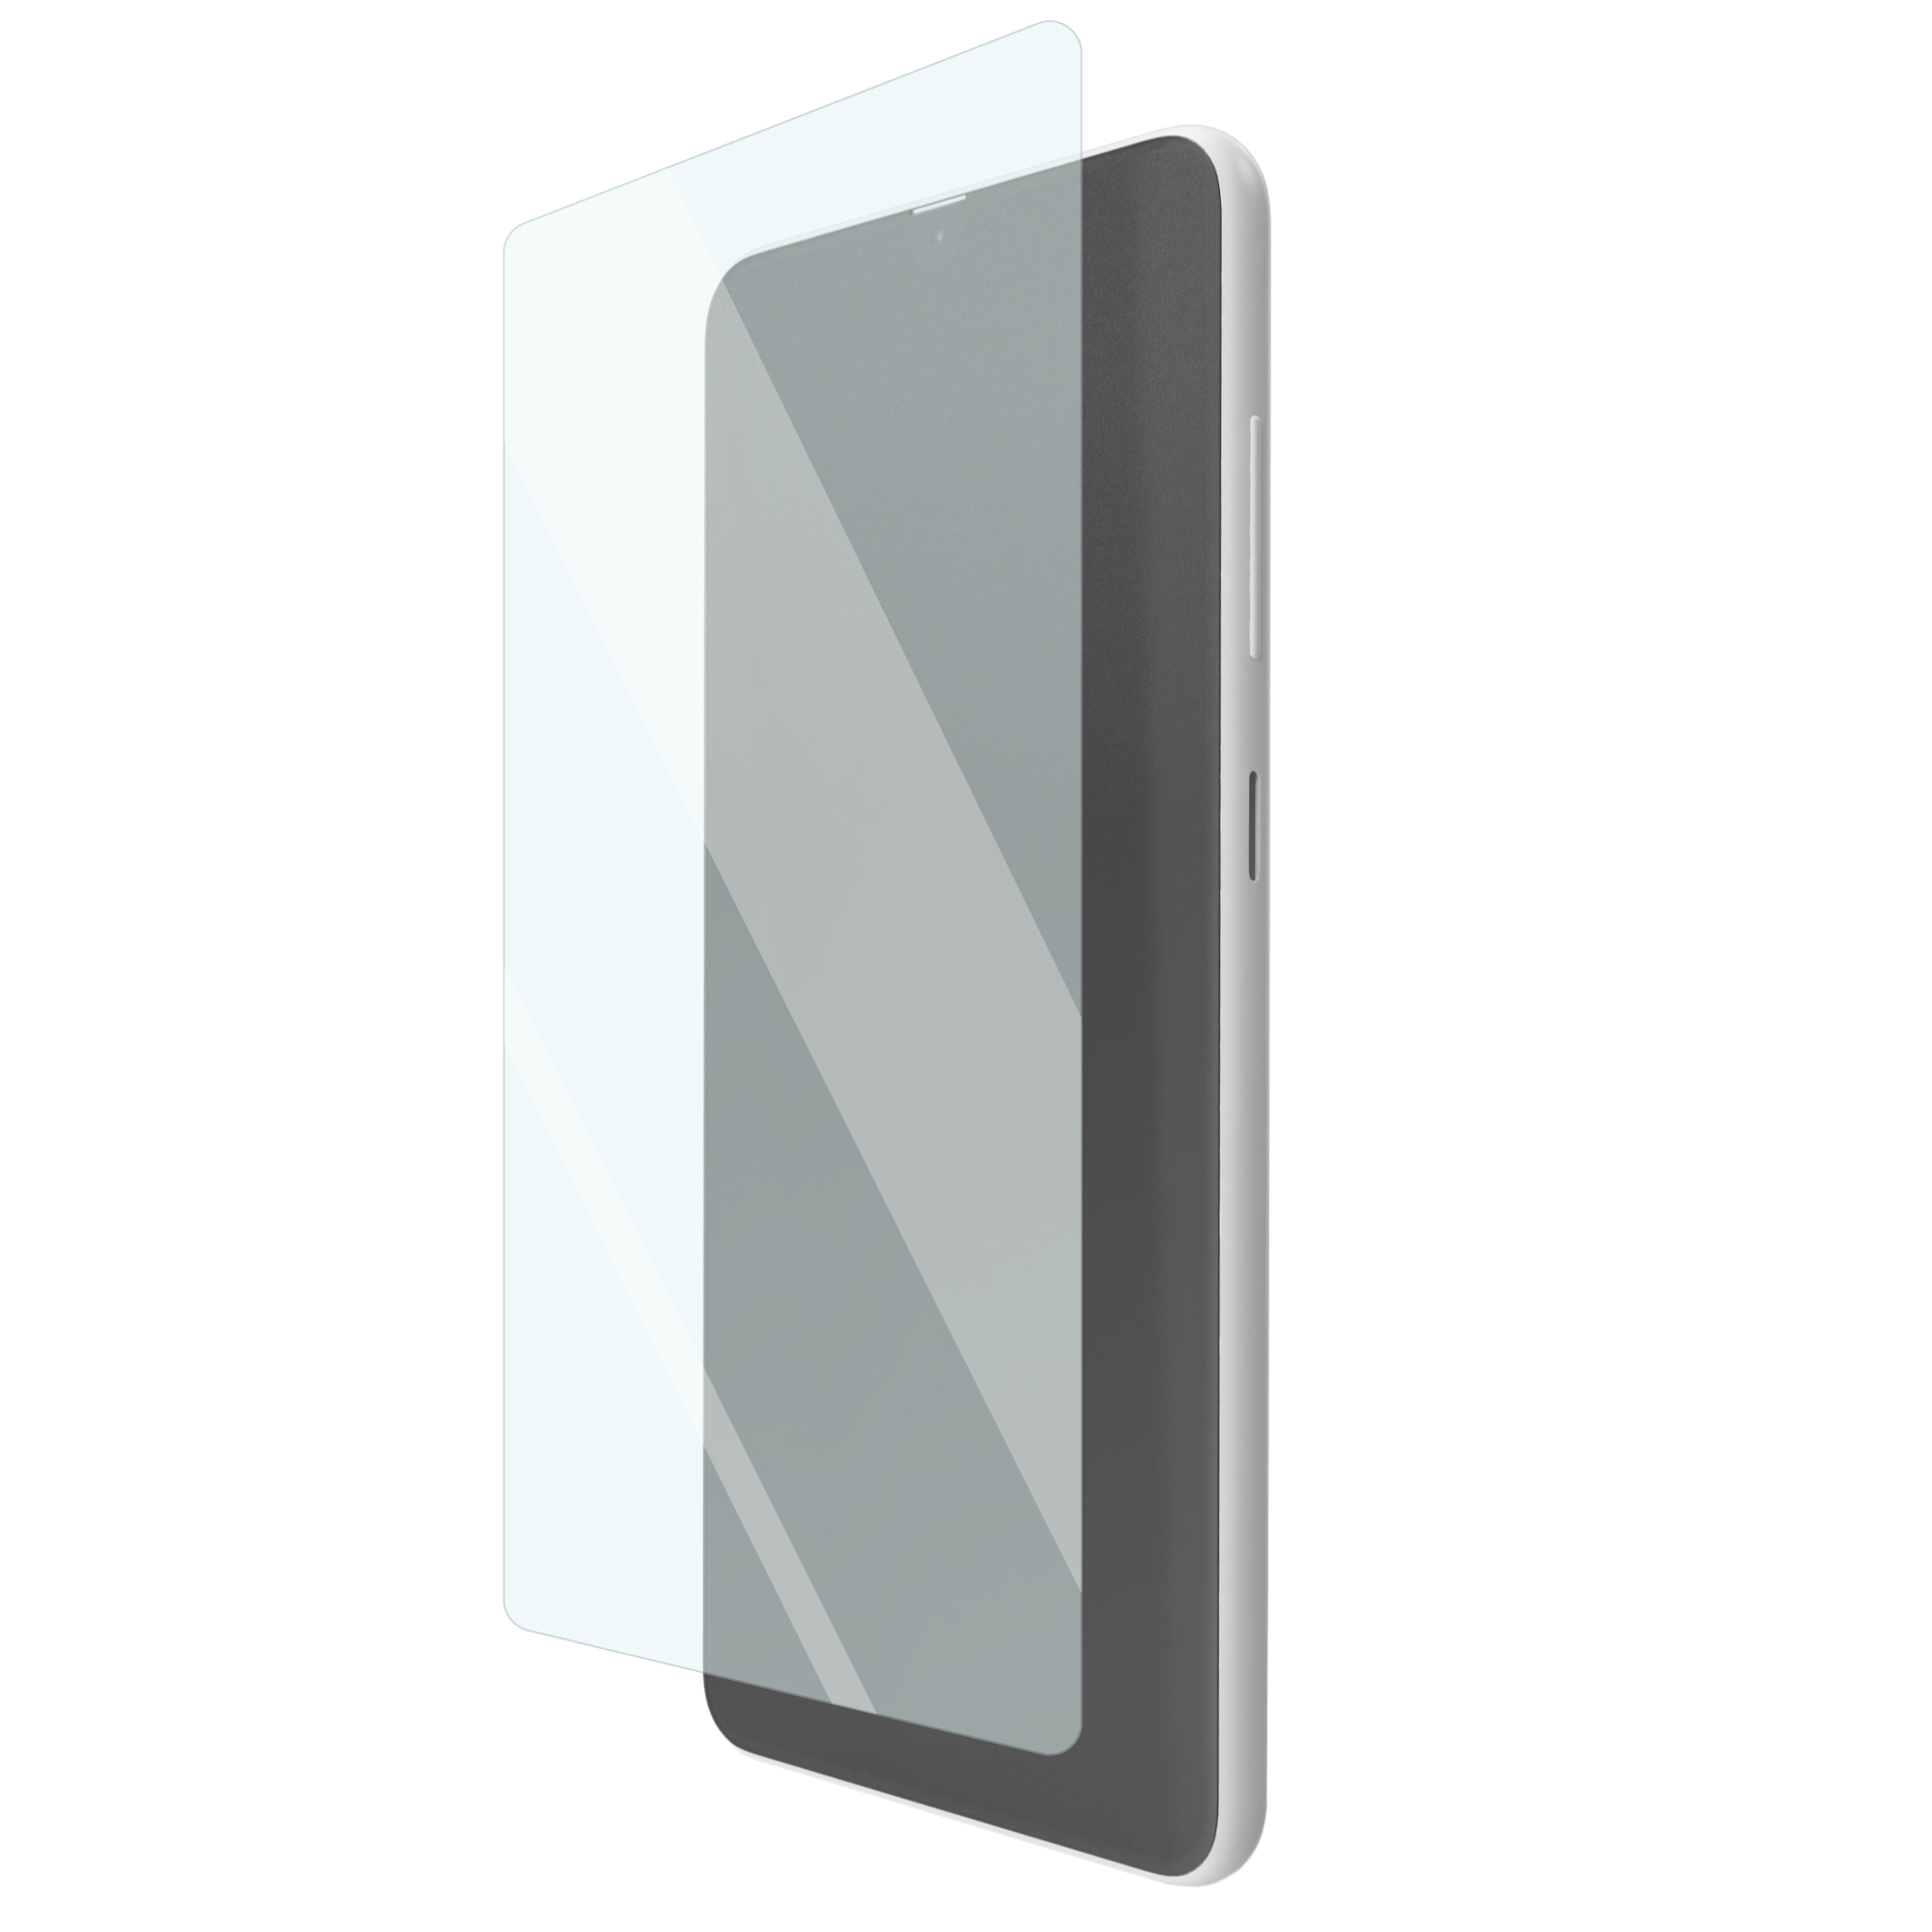 Folie de protectie silicon ShieldUP HiTech Regenerable pentru OnePlus 3T thumb